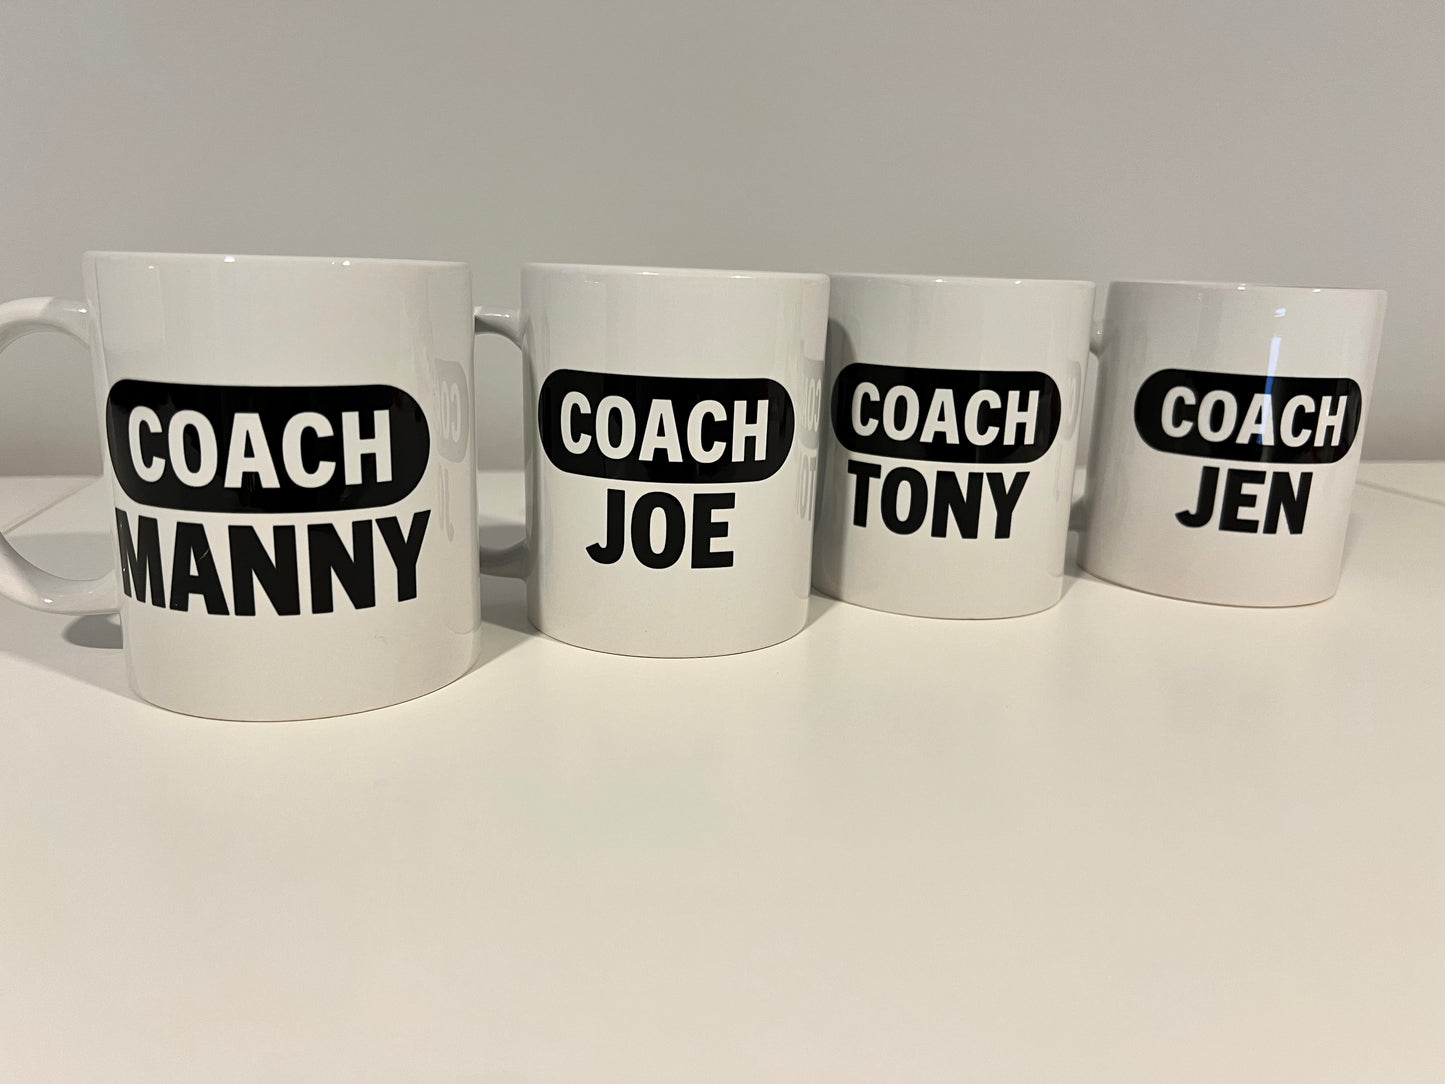 Customizable 12 oz Mugs - Add Team and Coach/Player Name